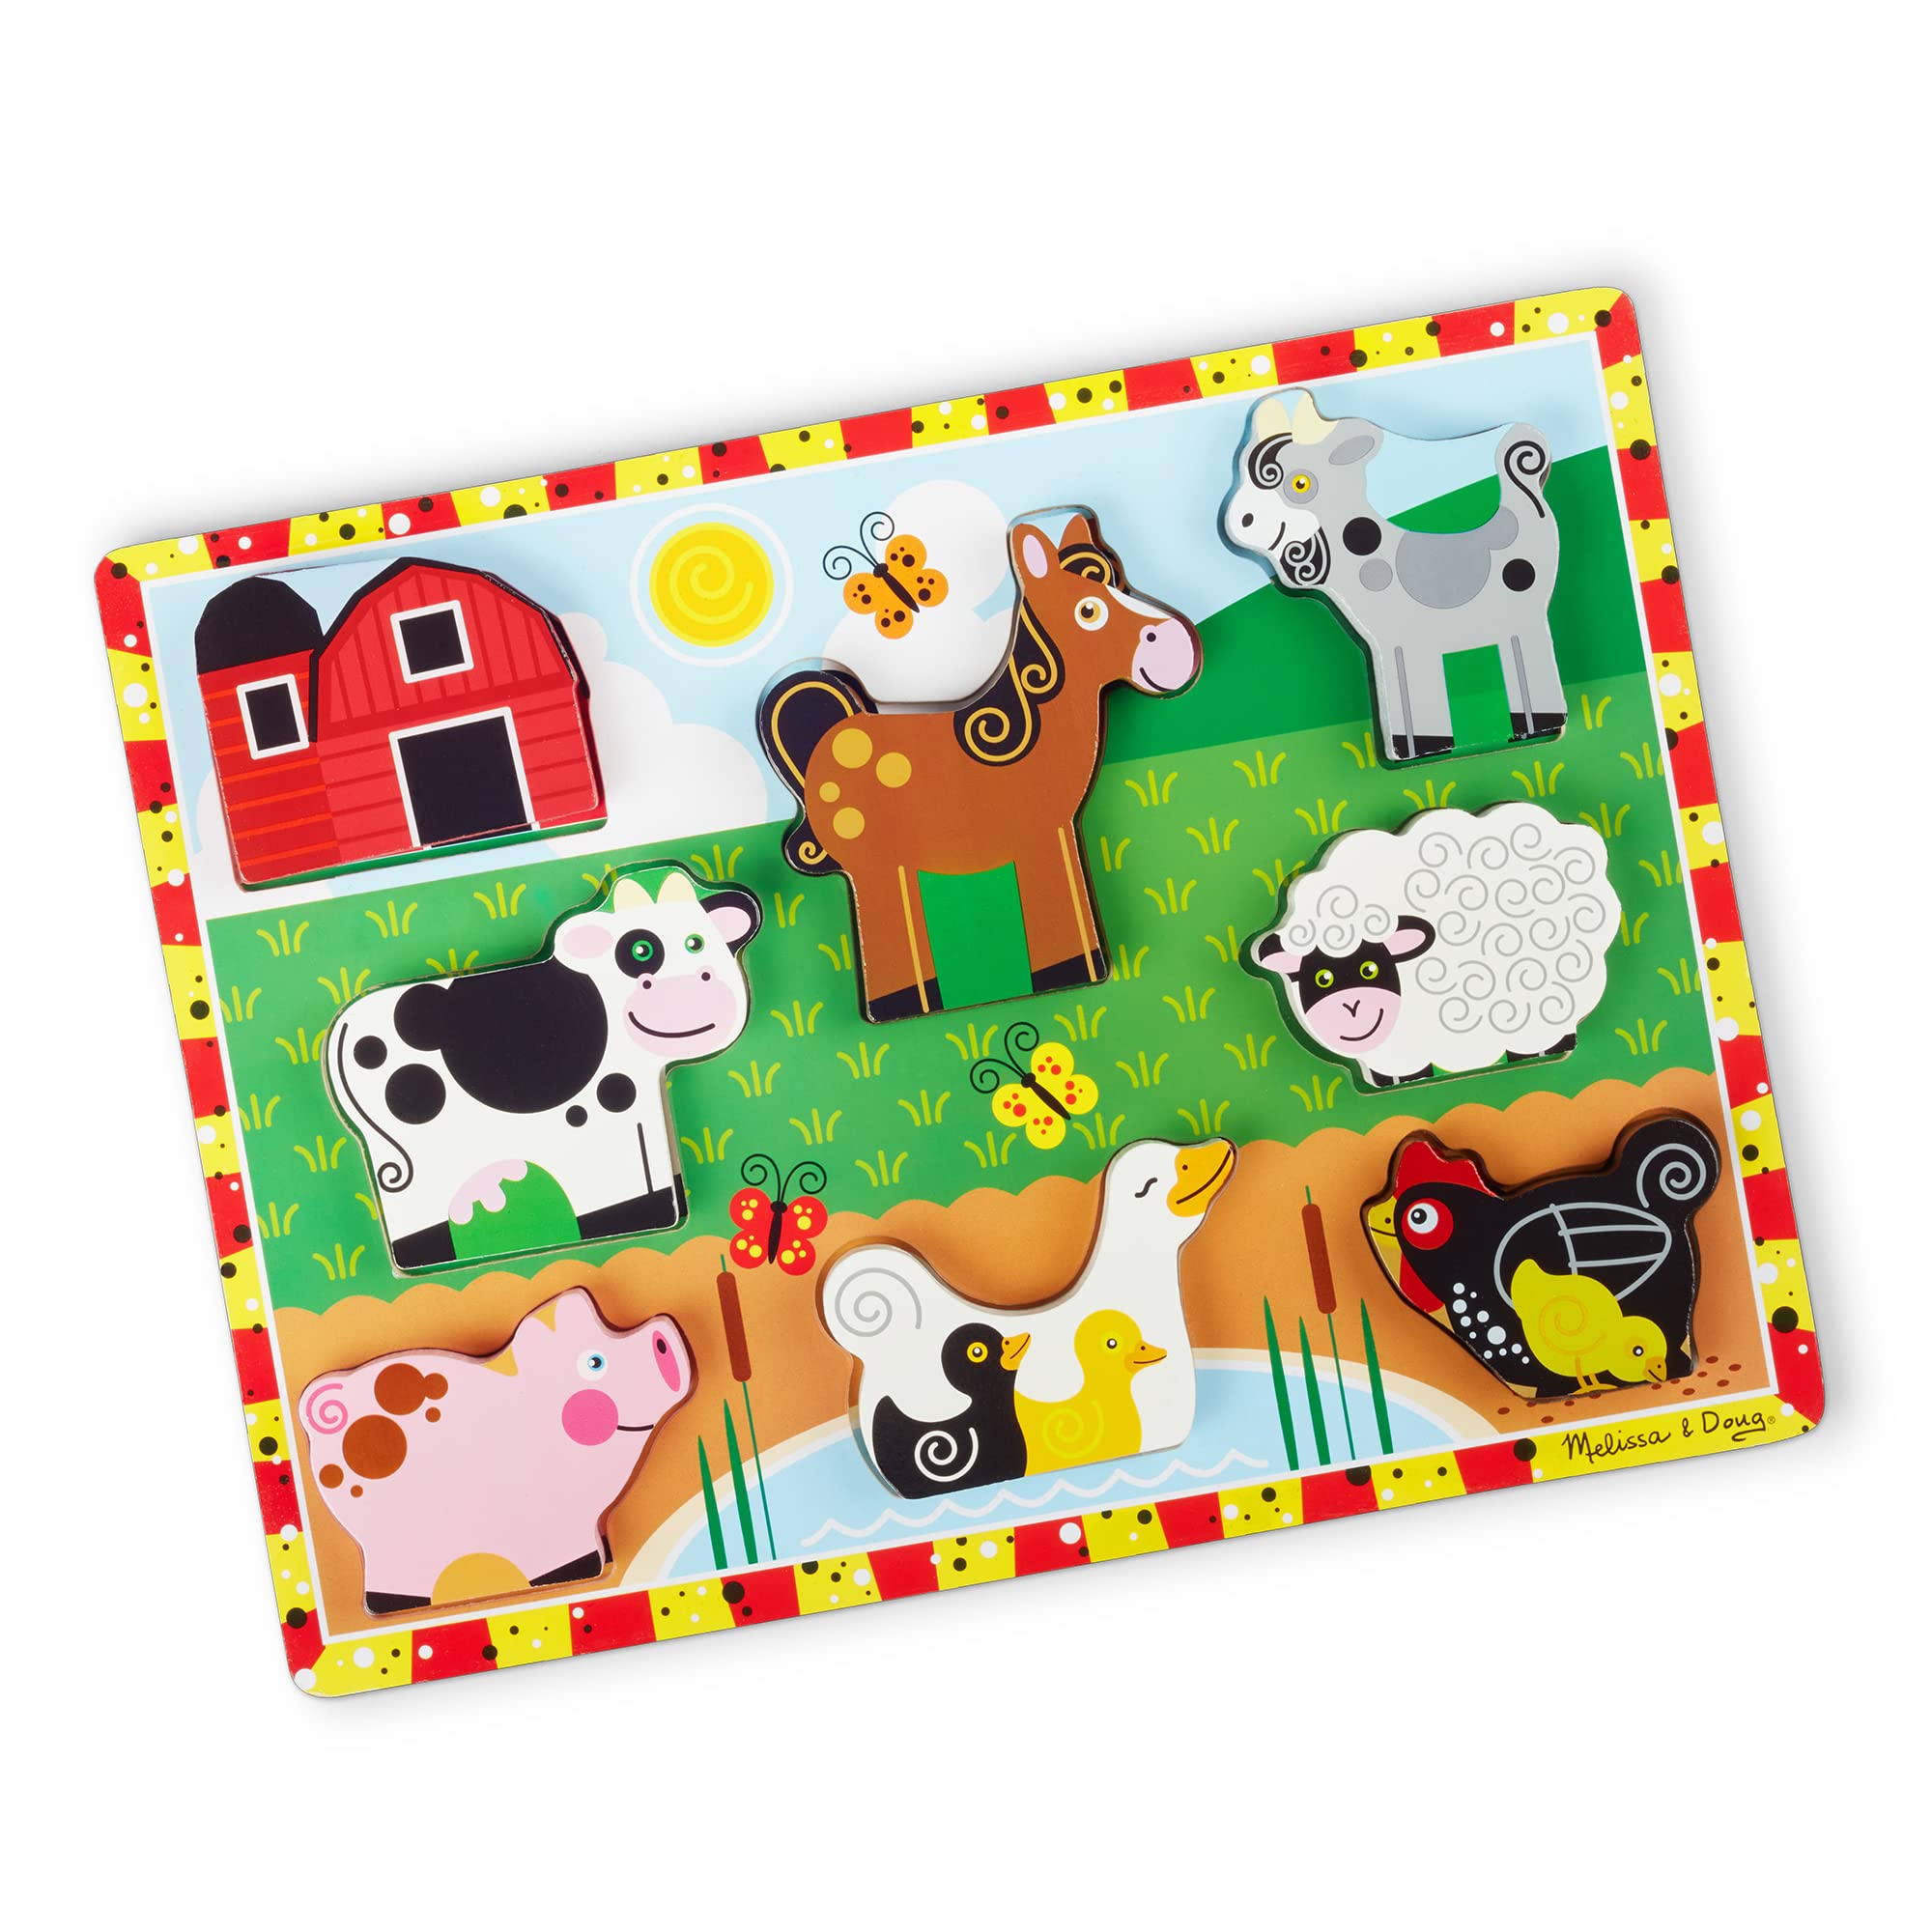 8-Piece Melissa & Doug Chunky Wooden Farm Animal Puzzle $5 + Free